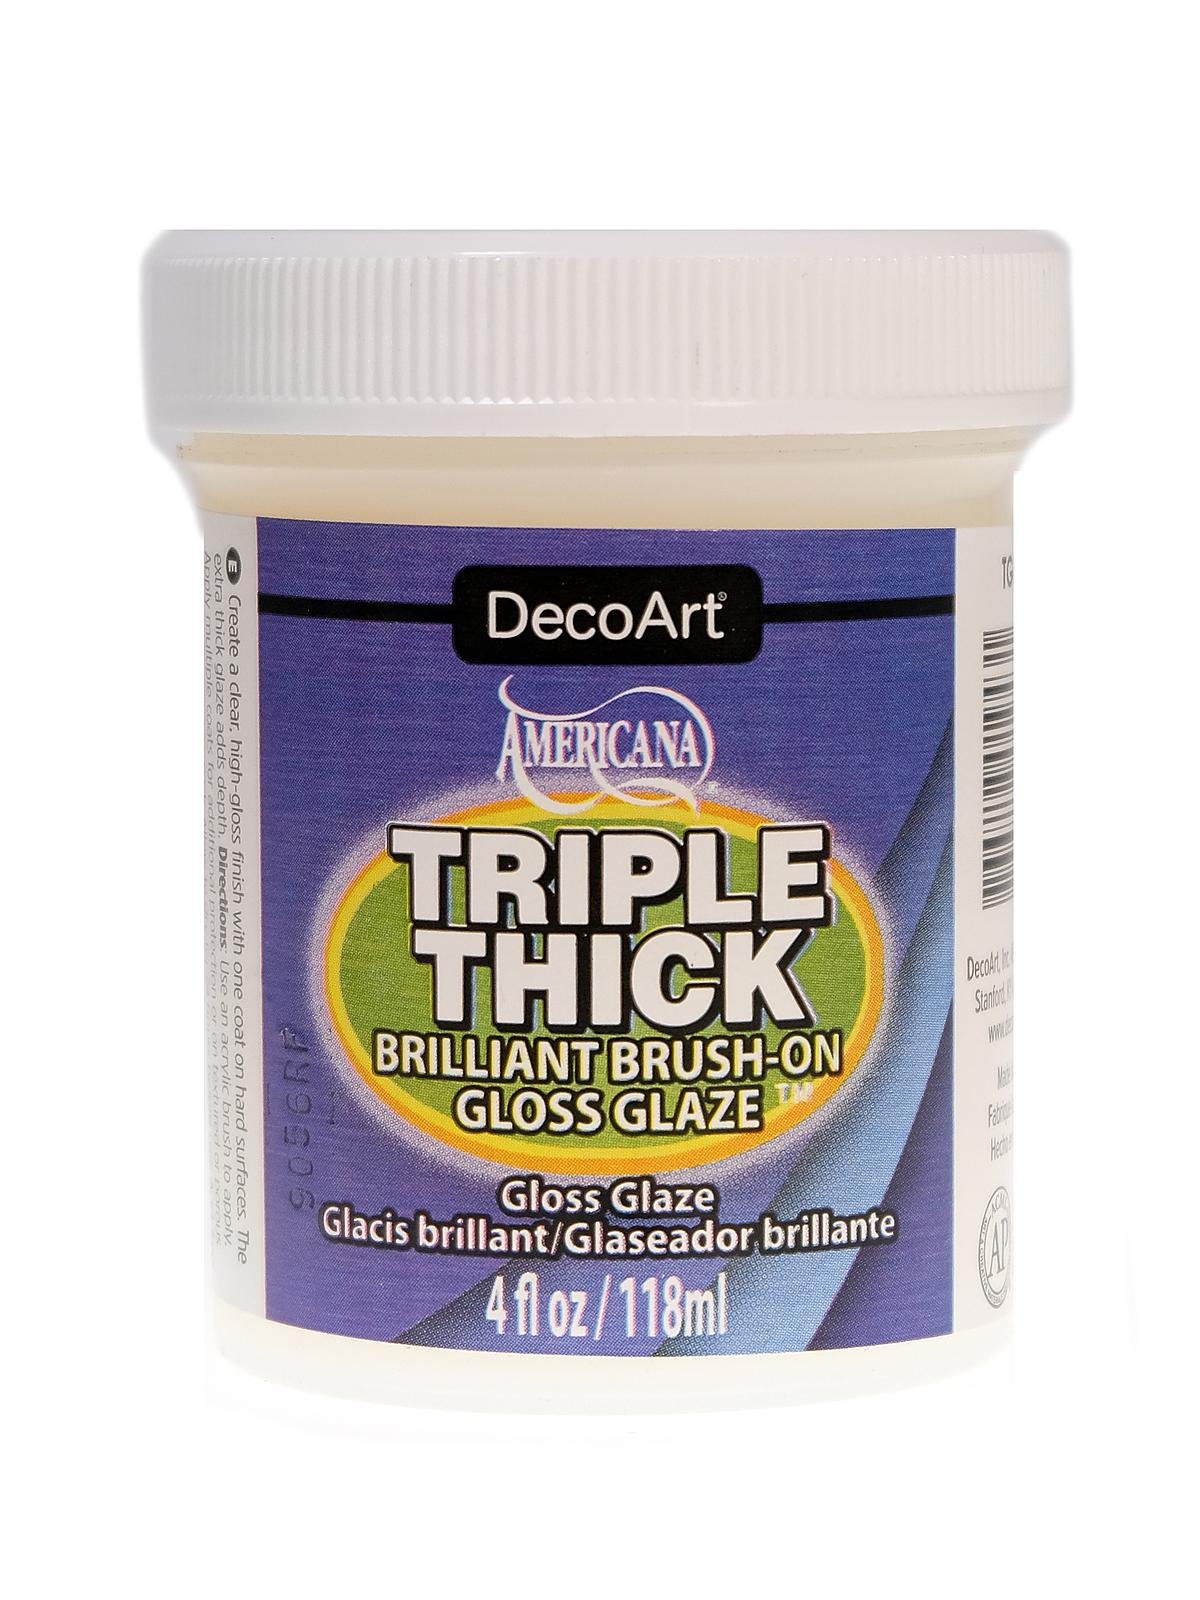 DecoArt - Triple Thick Brush on Gloss Glaze